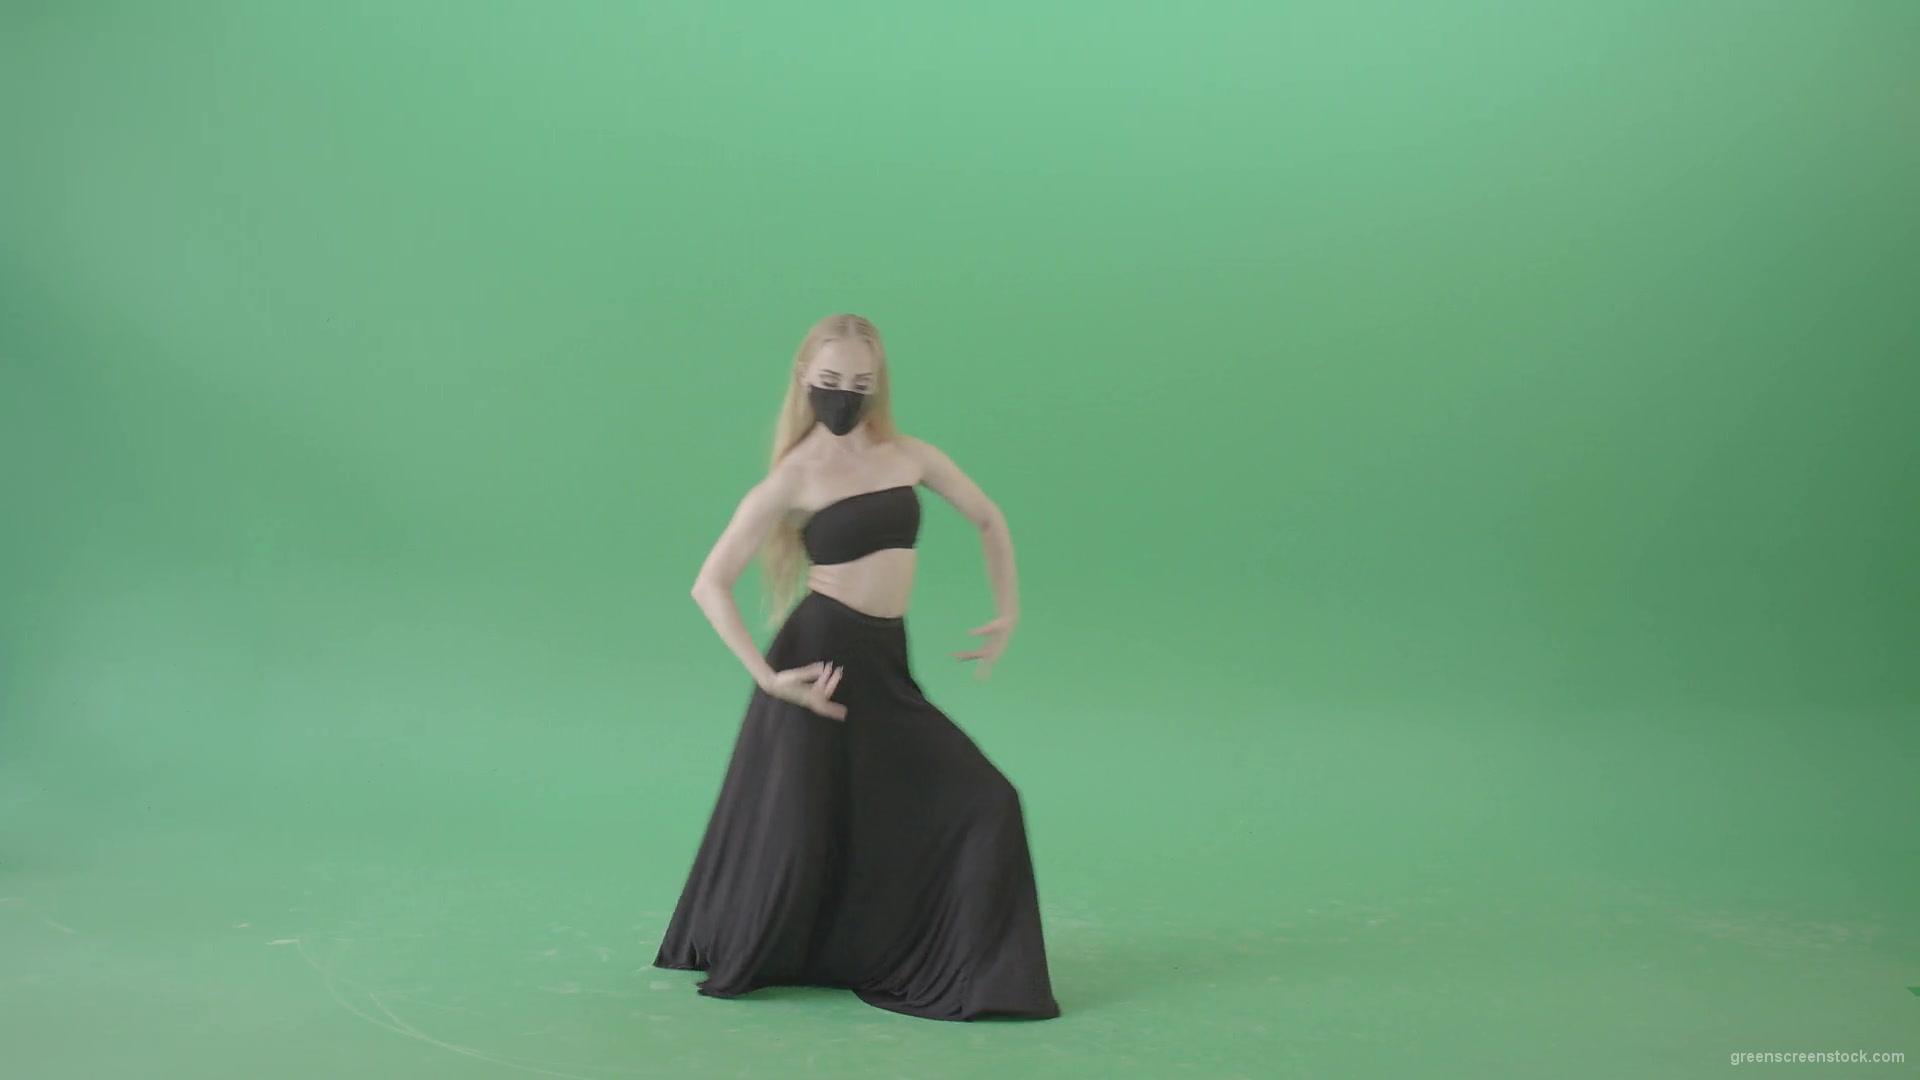 Blonde-Ballet-girl-in-black-dress-and-mask-dancing-Corona-Virus-flamenco-on-green-screen-4K-Video-Footage-1920_006 Green Screen Stock